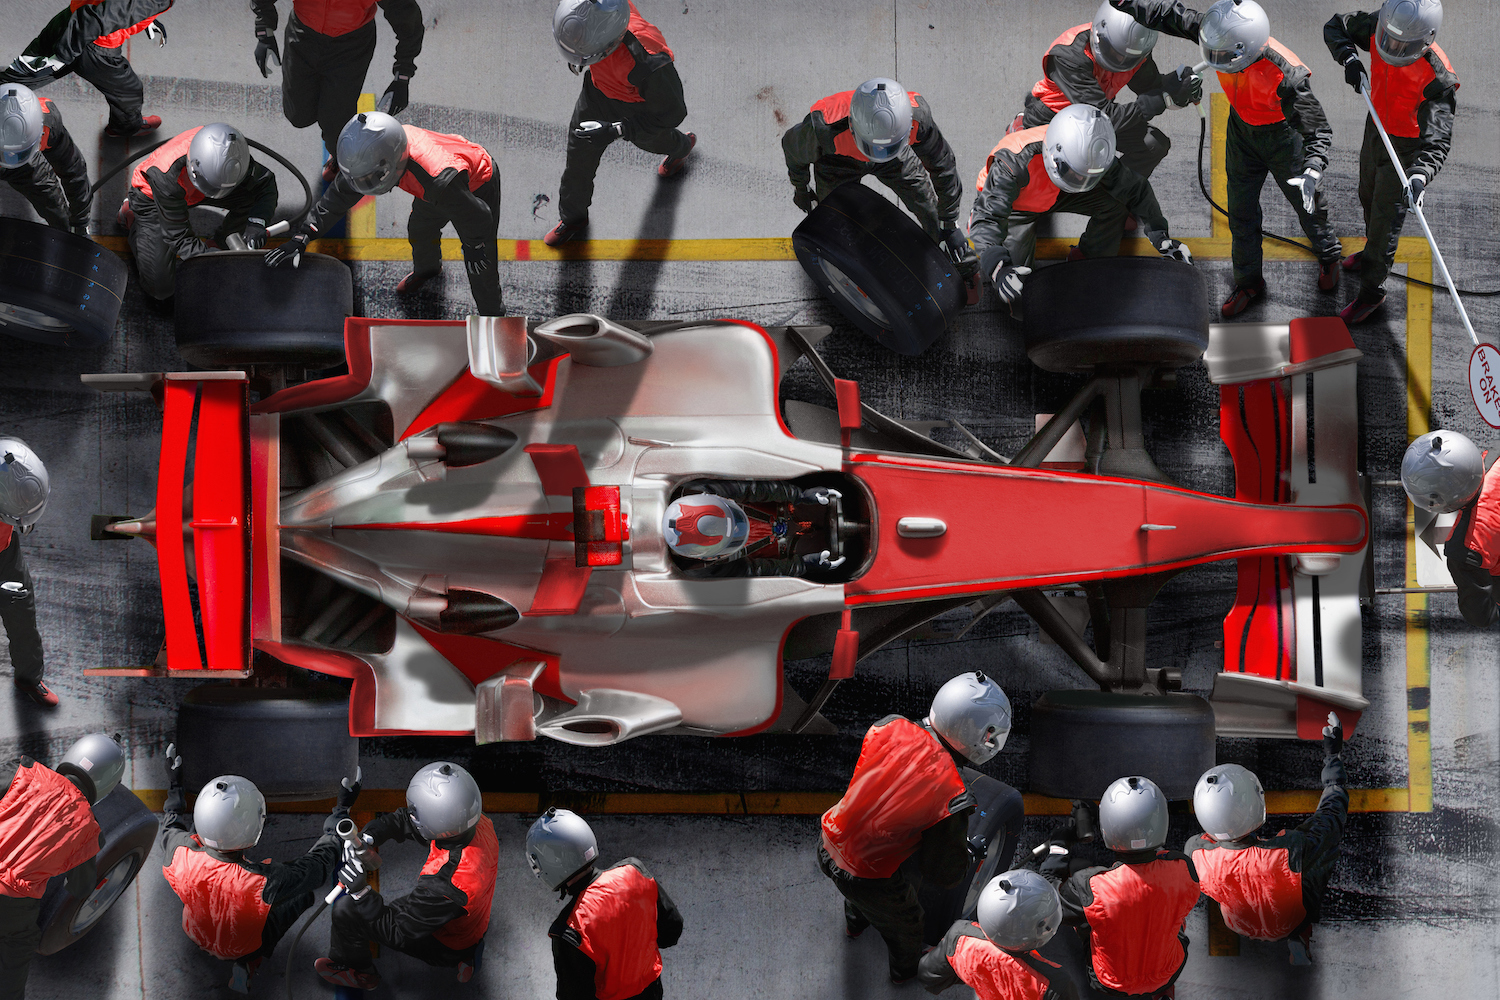 F1 pit crew working on F1 car.